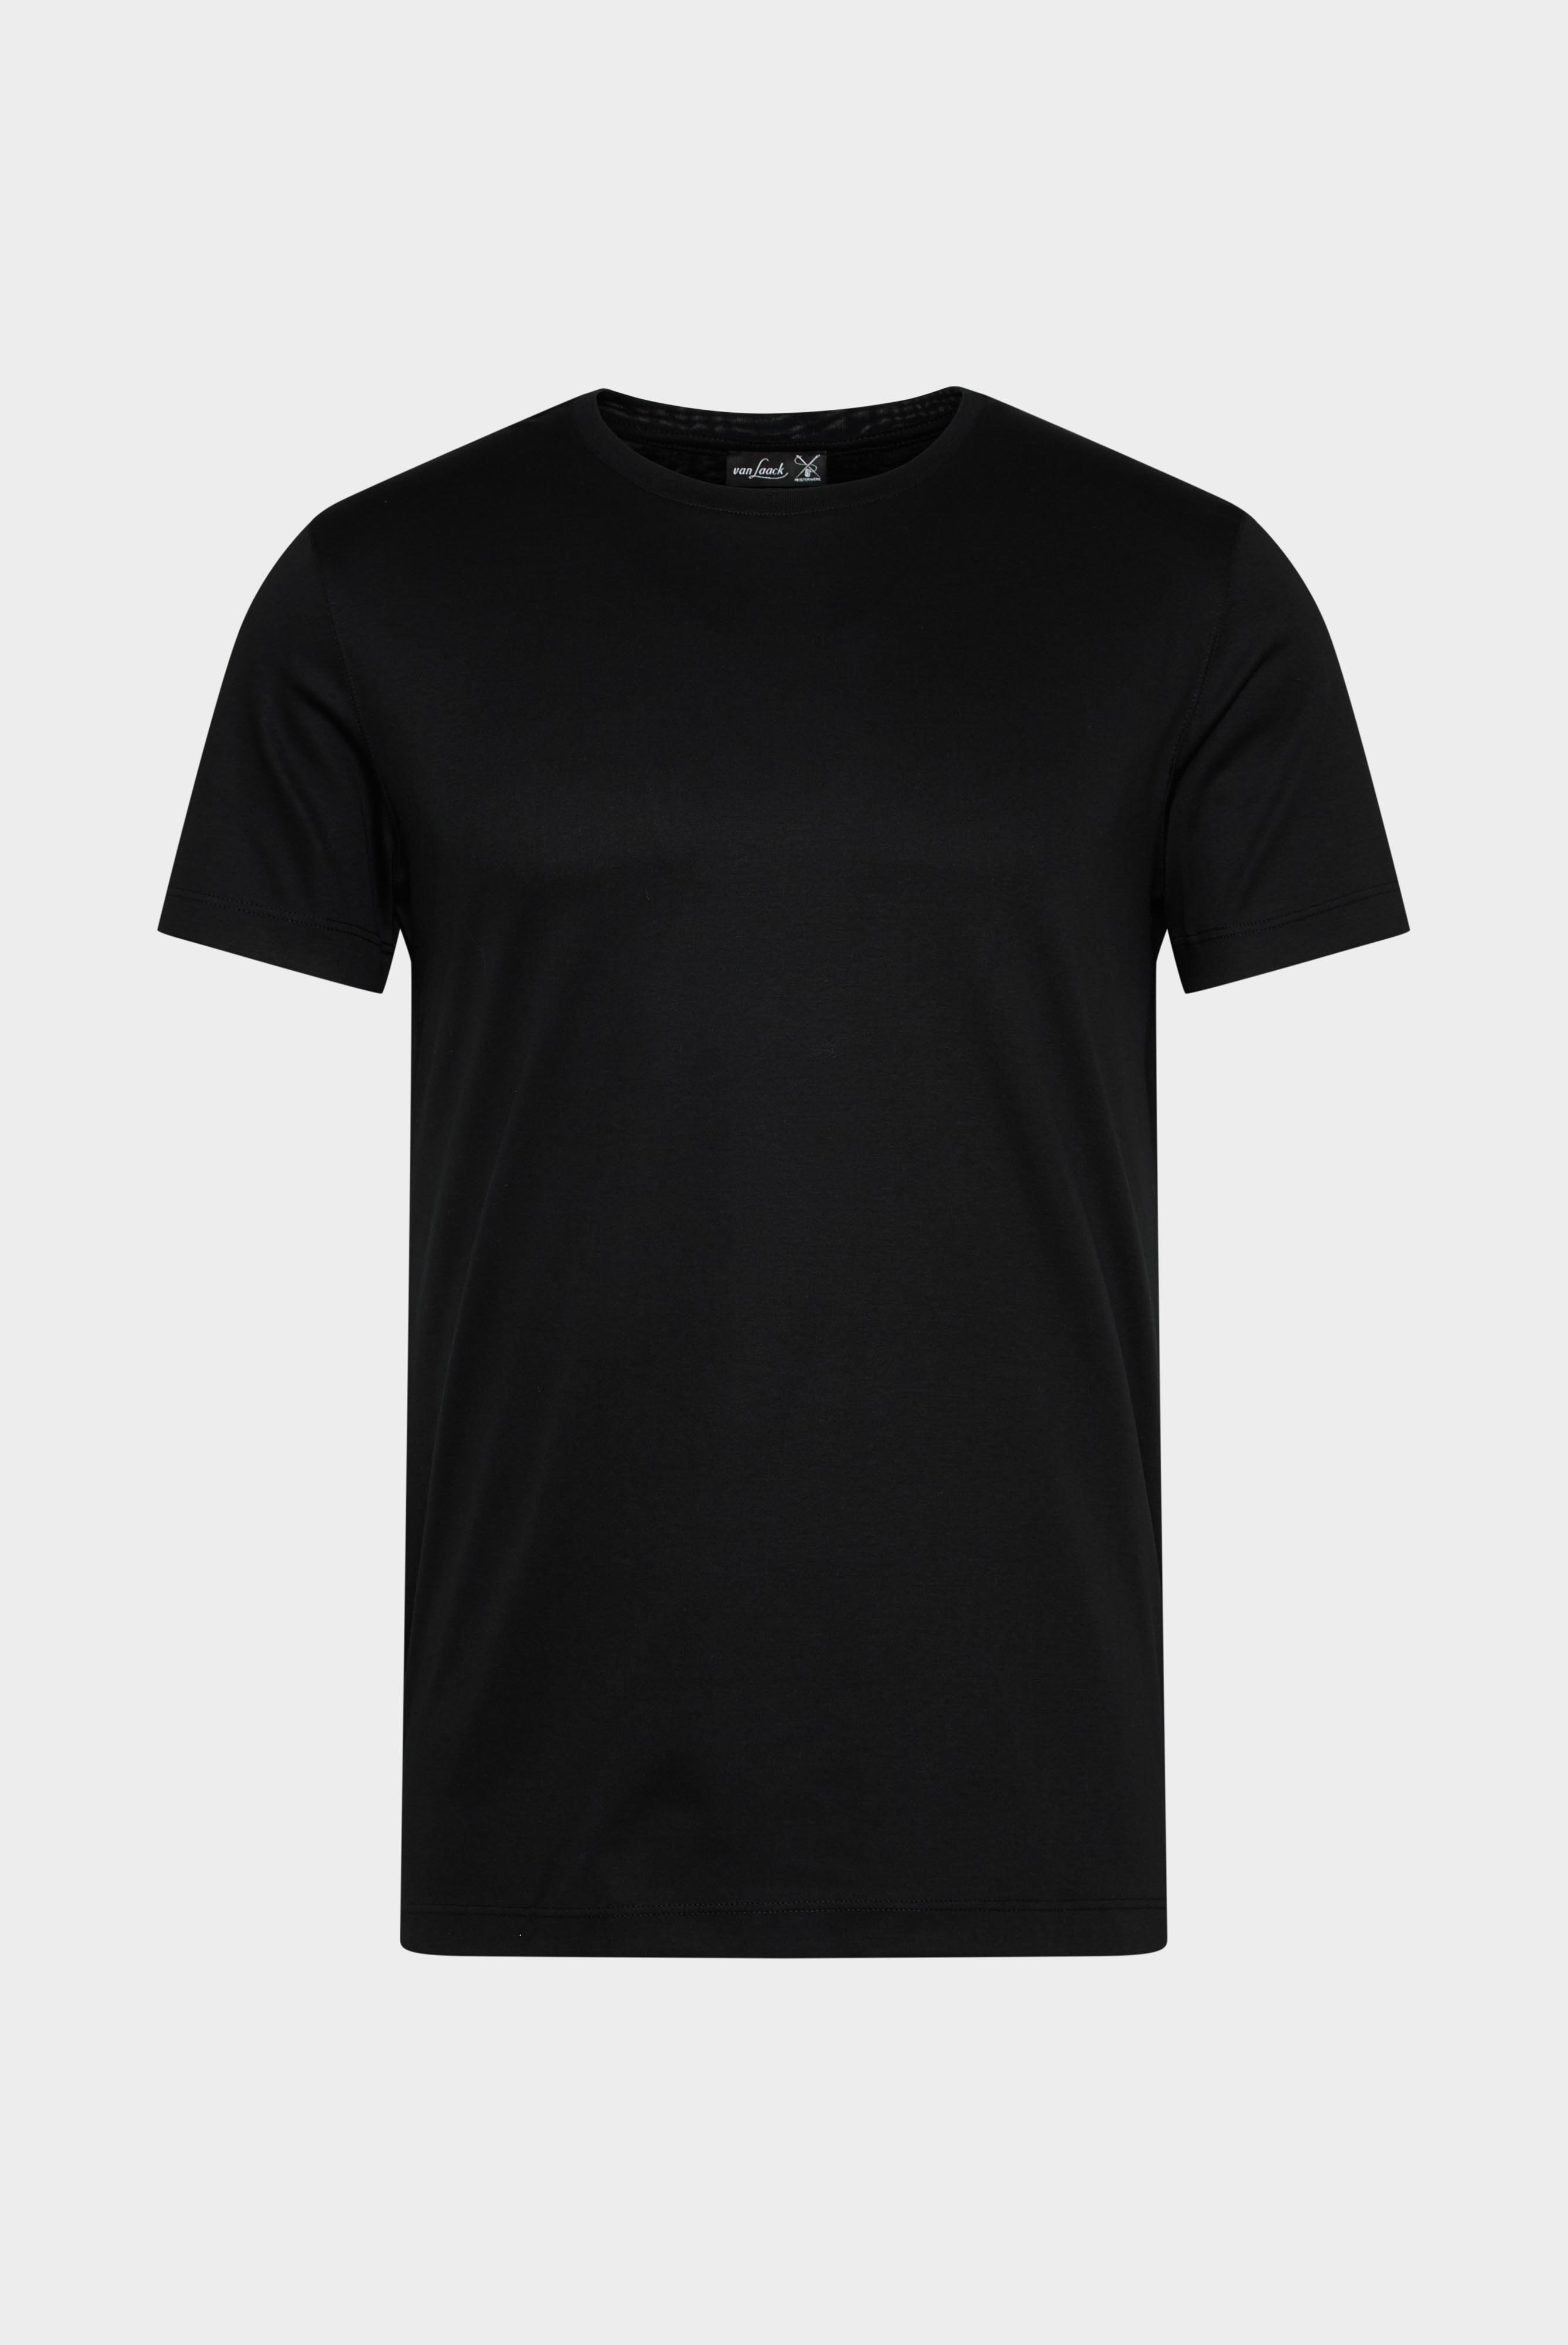 T-Shirts+Rundhals Jersey T-Shirt Slim Fit+20.1717.UX.180031.099.M